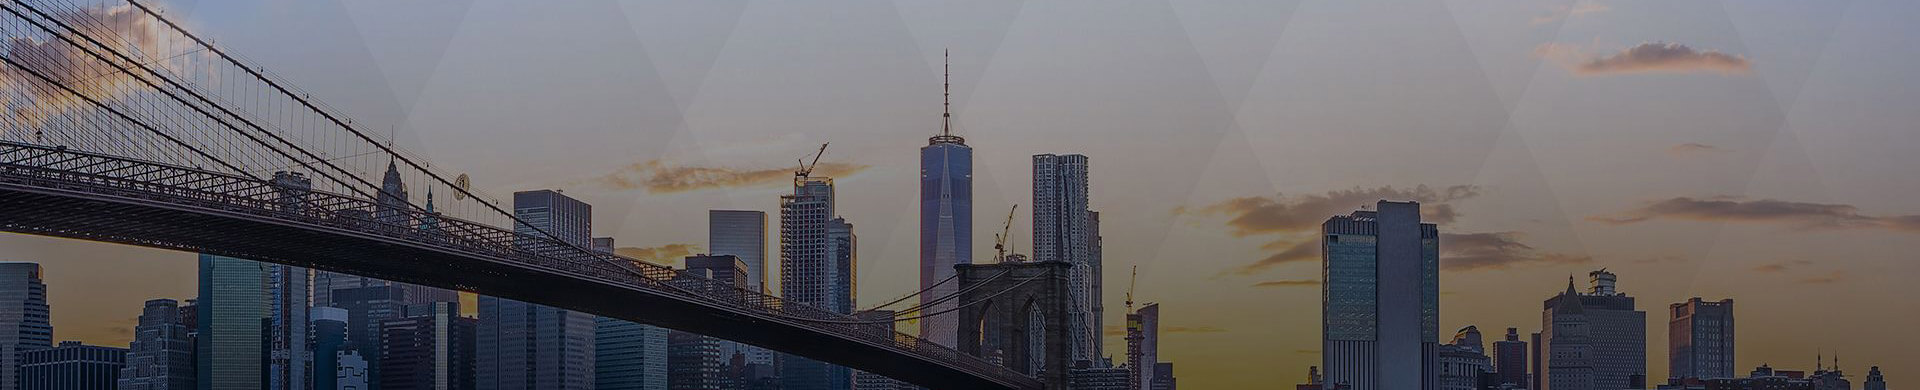 Brooklyn bridge with NYC skyline in background